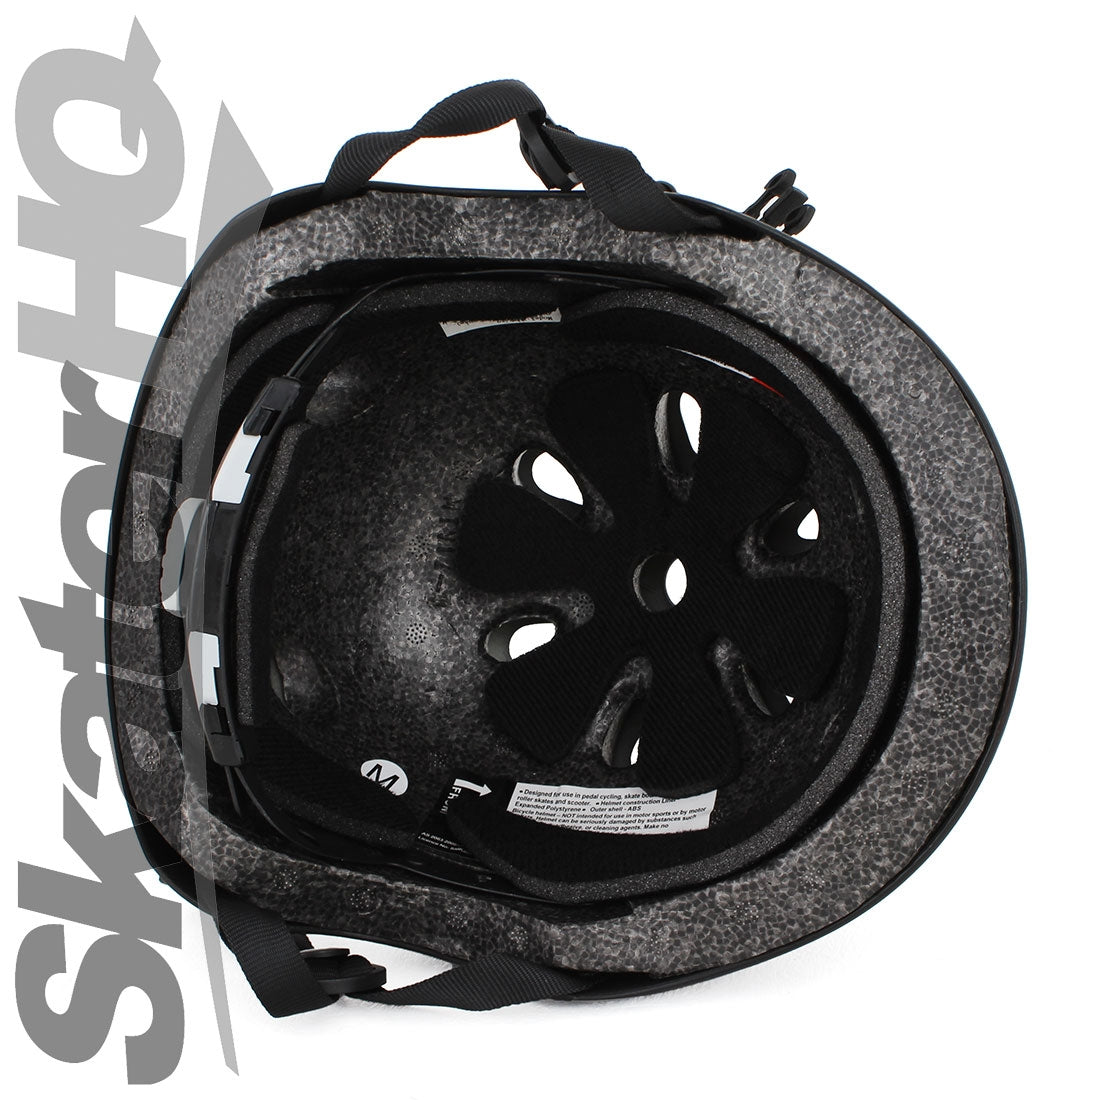 GAIN Sleeper Adjustable Matte Black Helmet - XS/S/M Helmets